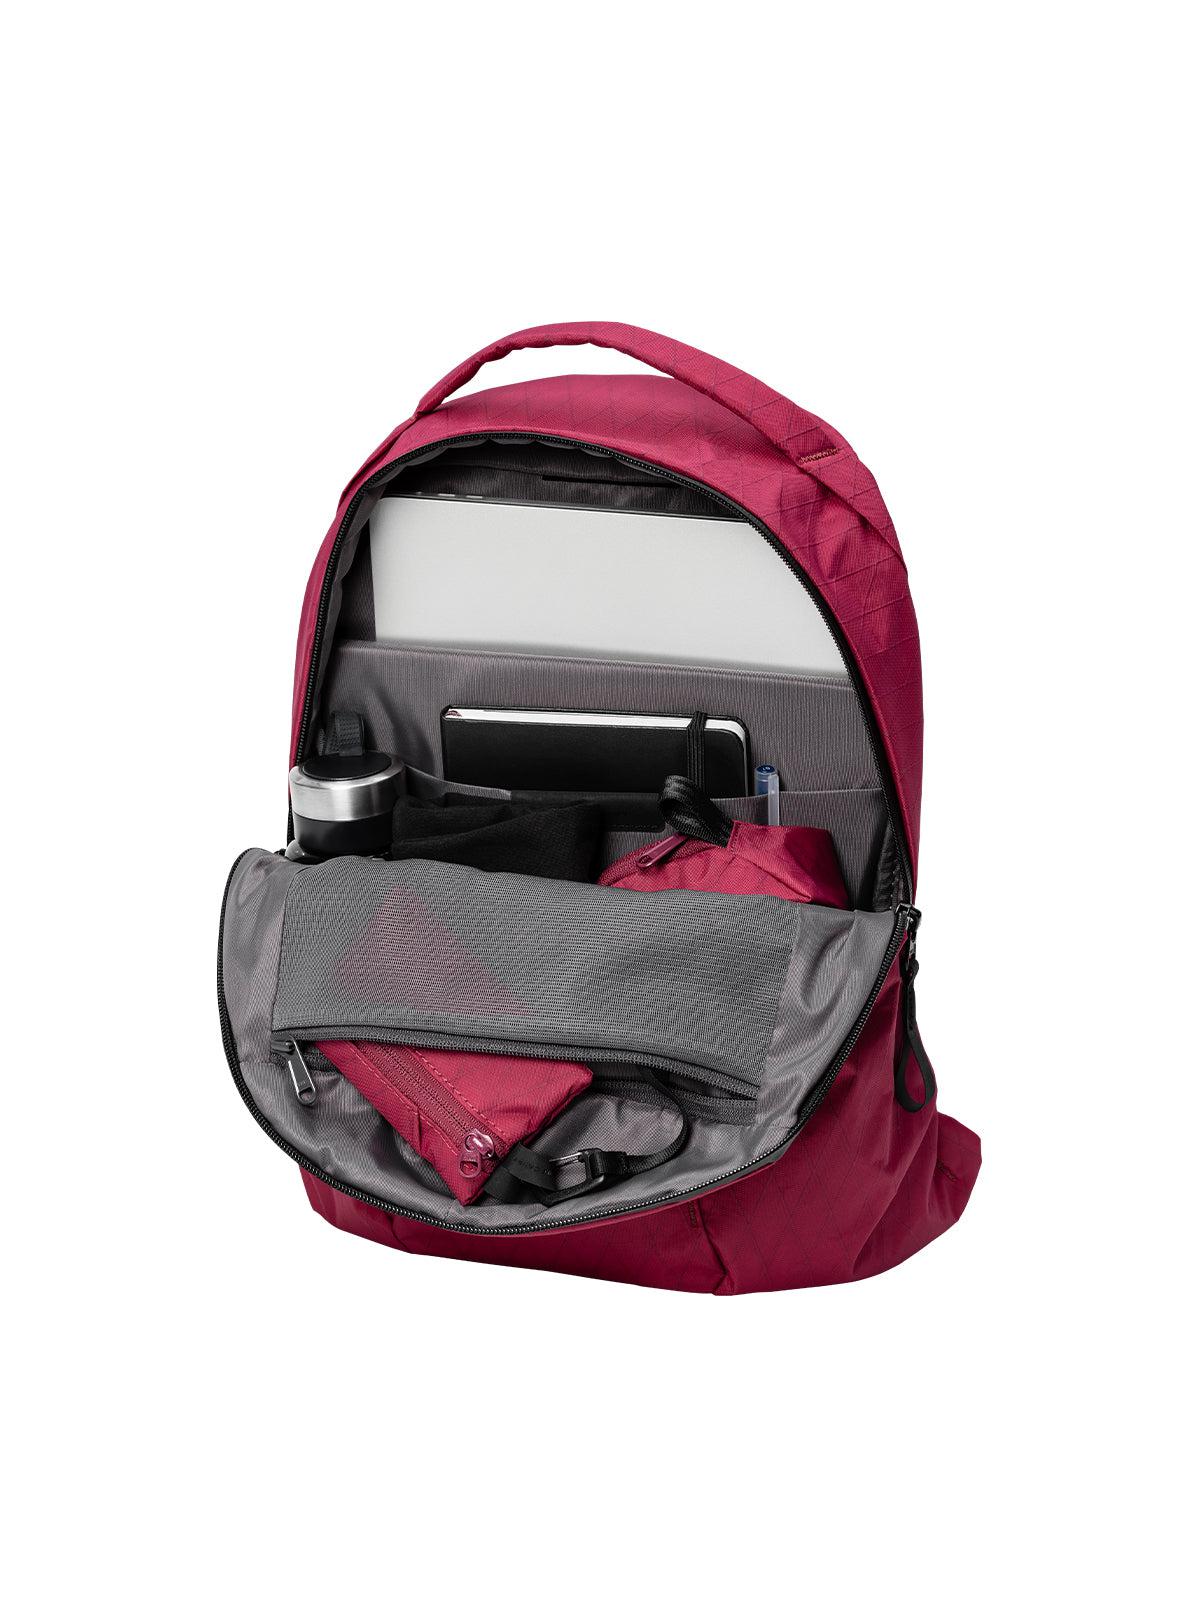 Able Carry Thirteen Daybag X-Pac Port Red VX21